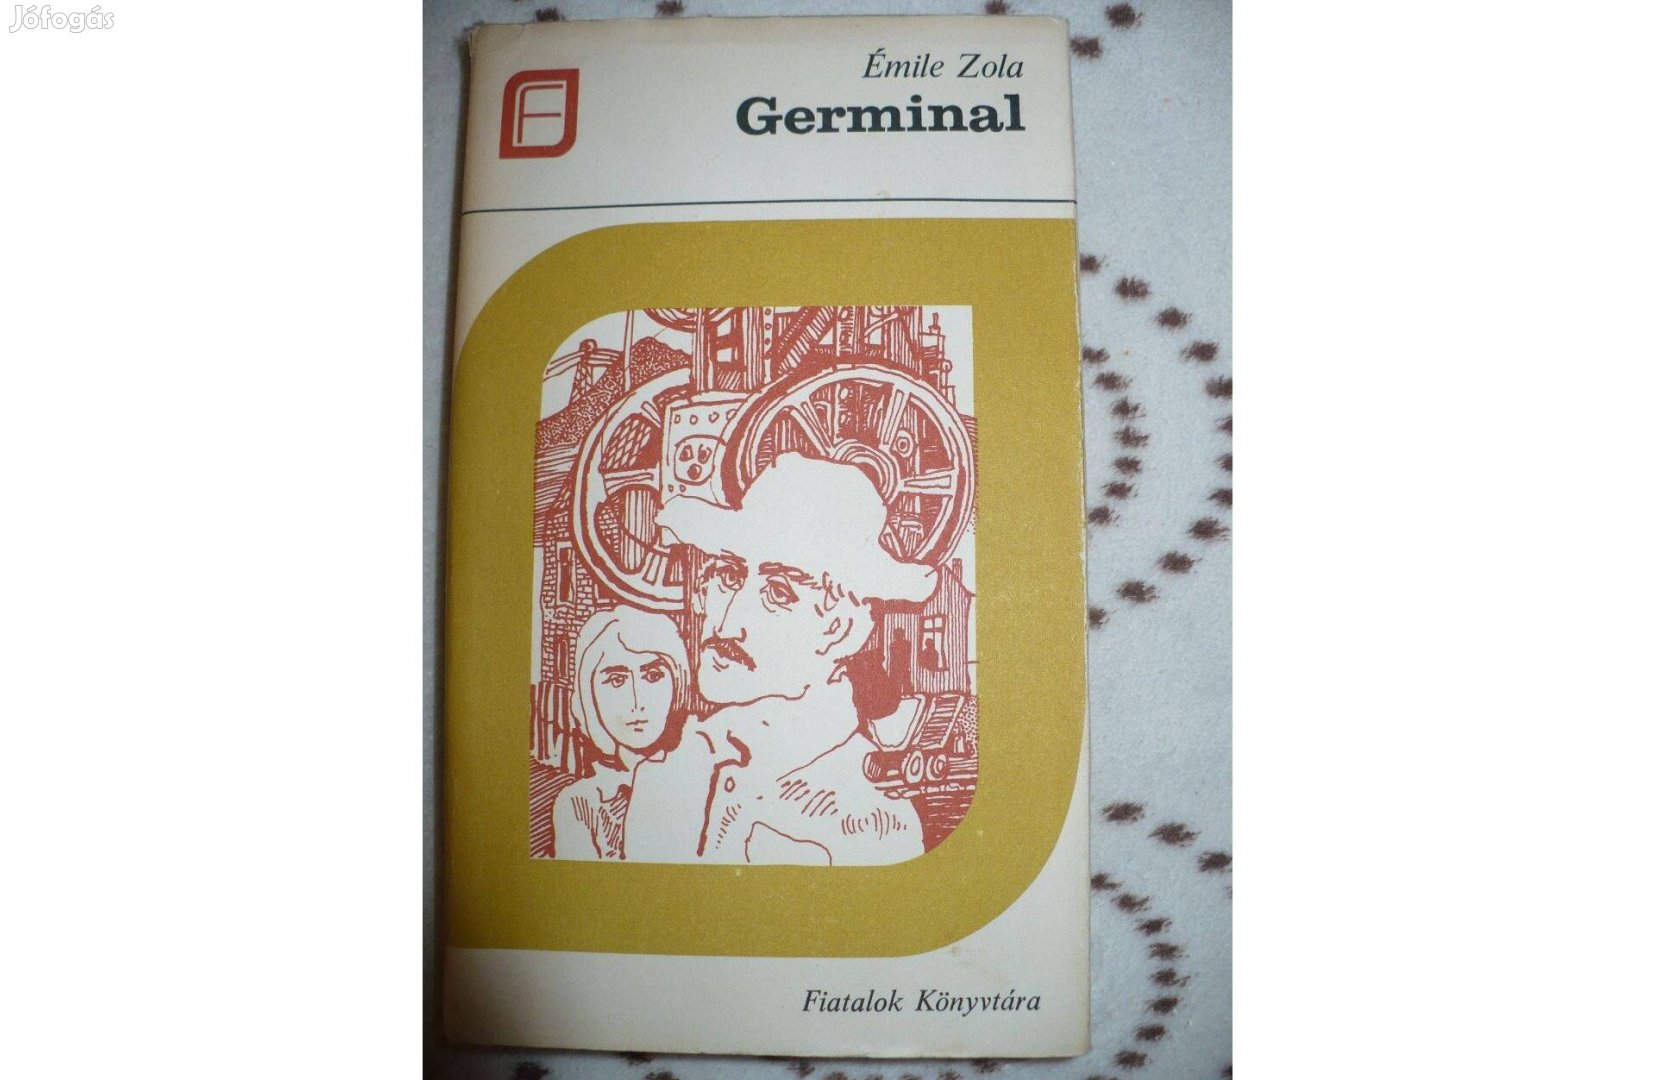 Émile Zola: Germinal